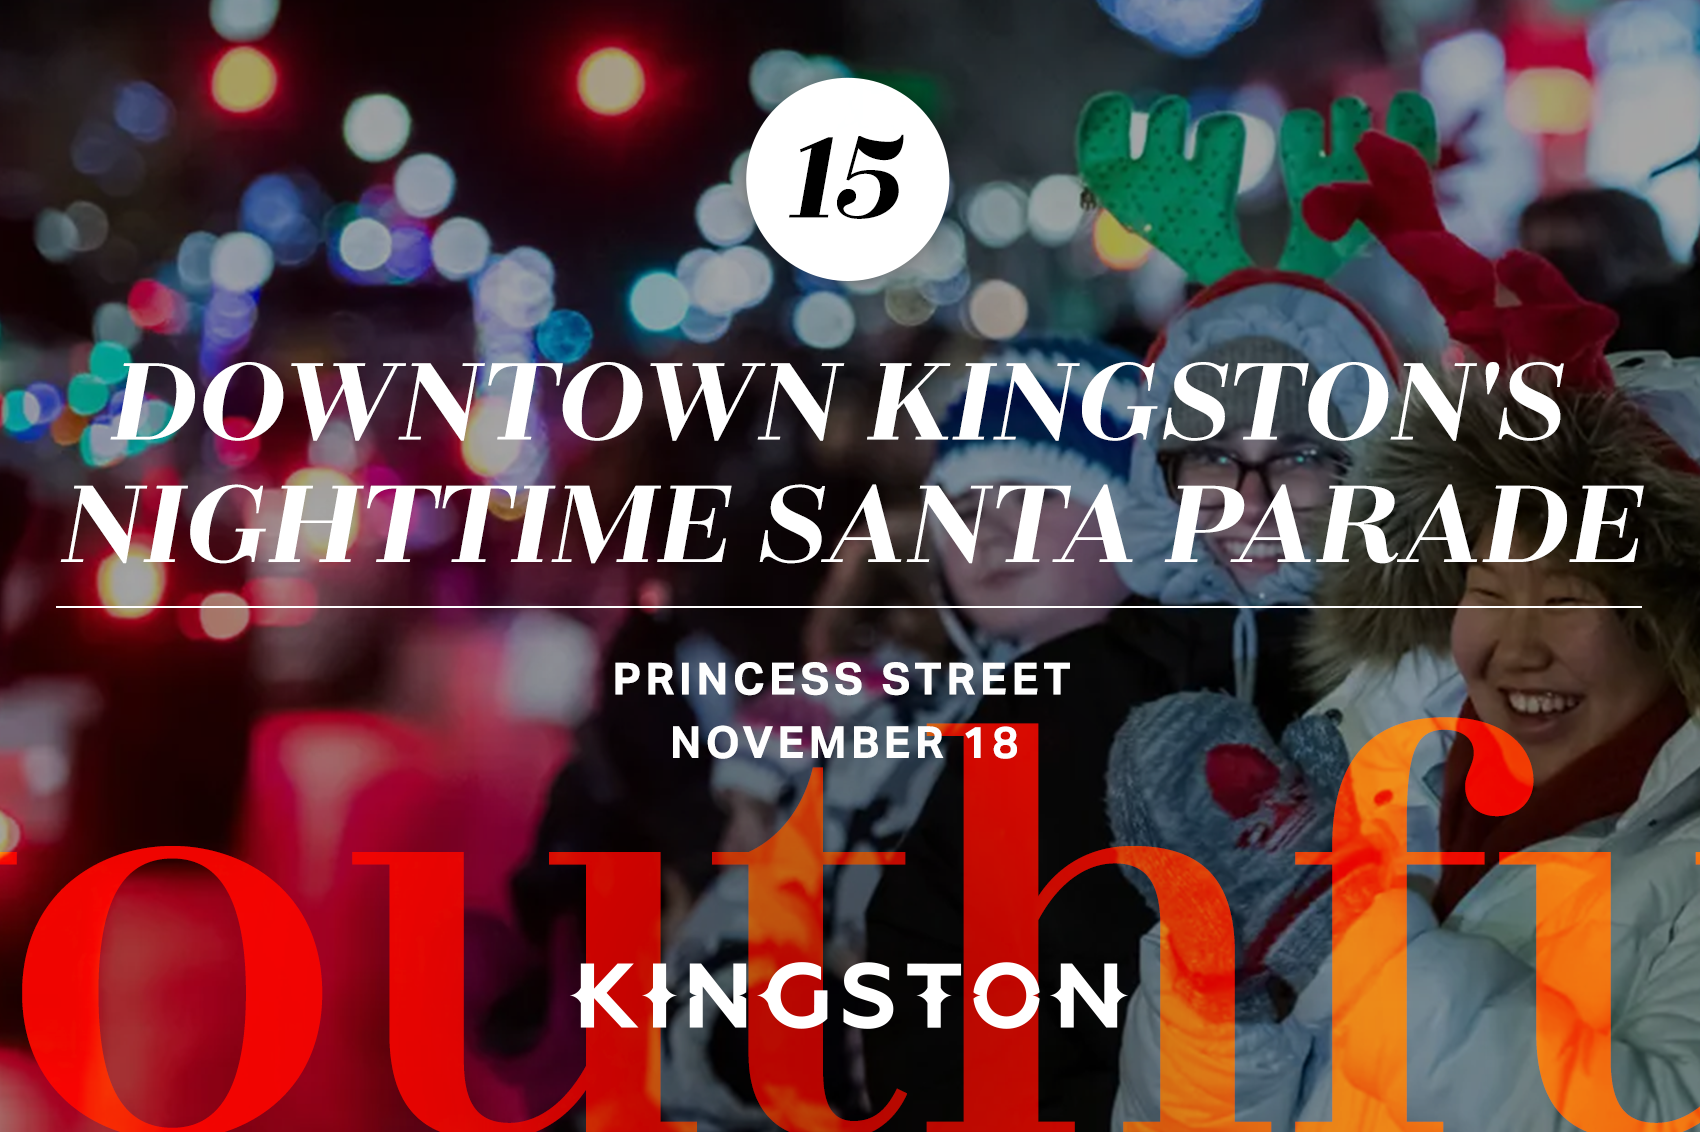 Downtown Kingston's Nighttime Santa Parade